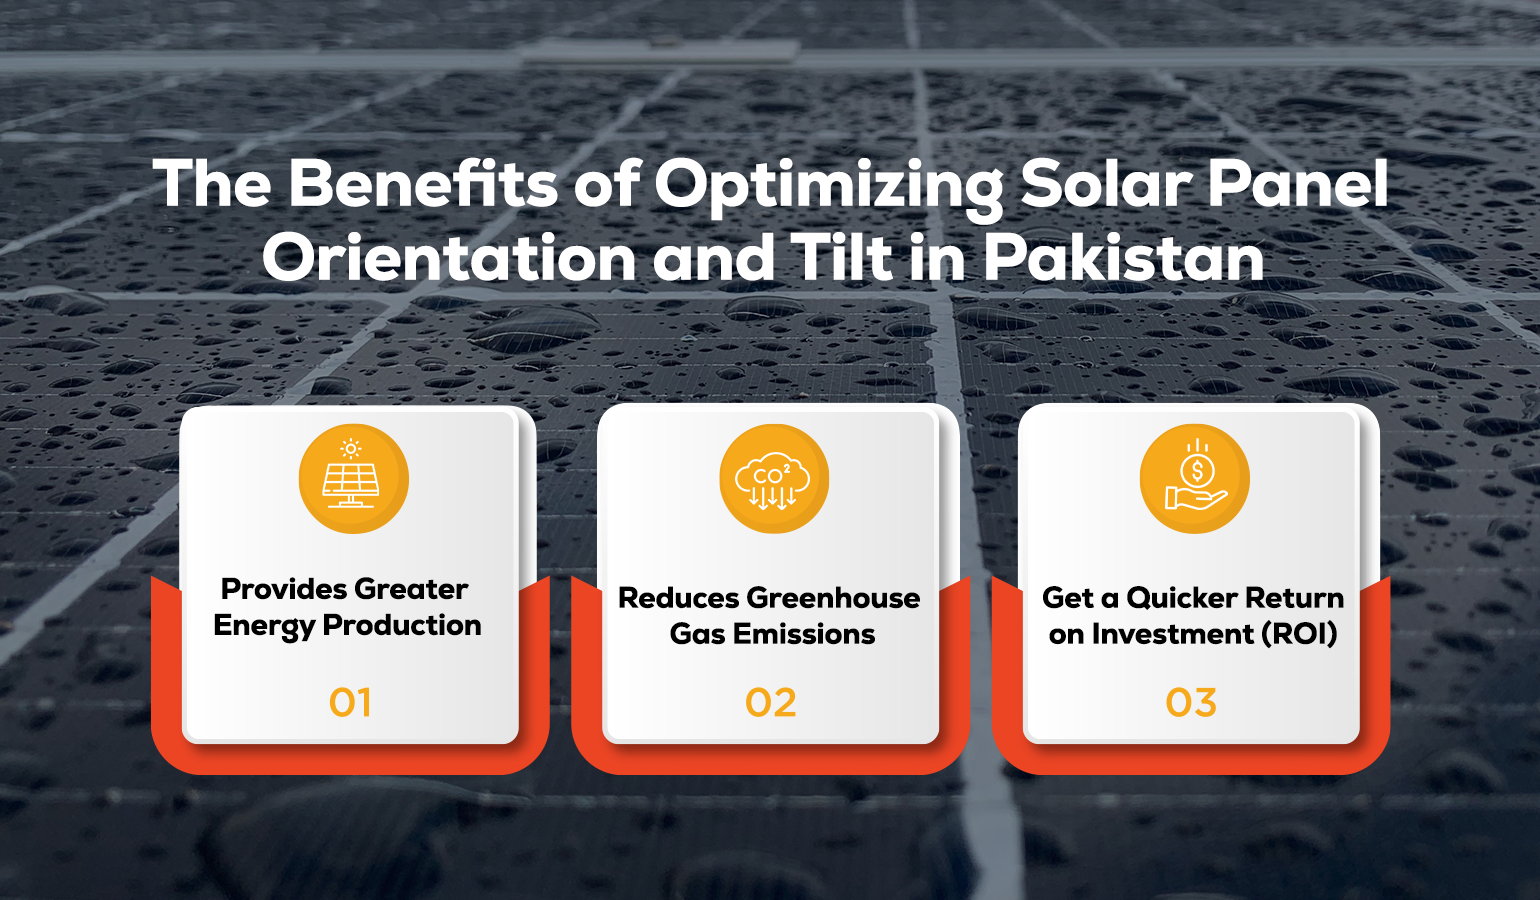 The Benefits of Optimizing Solar Panel Orientation and Tilt in Pakistan